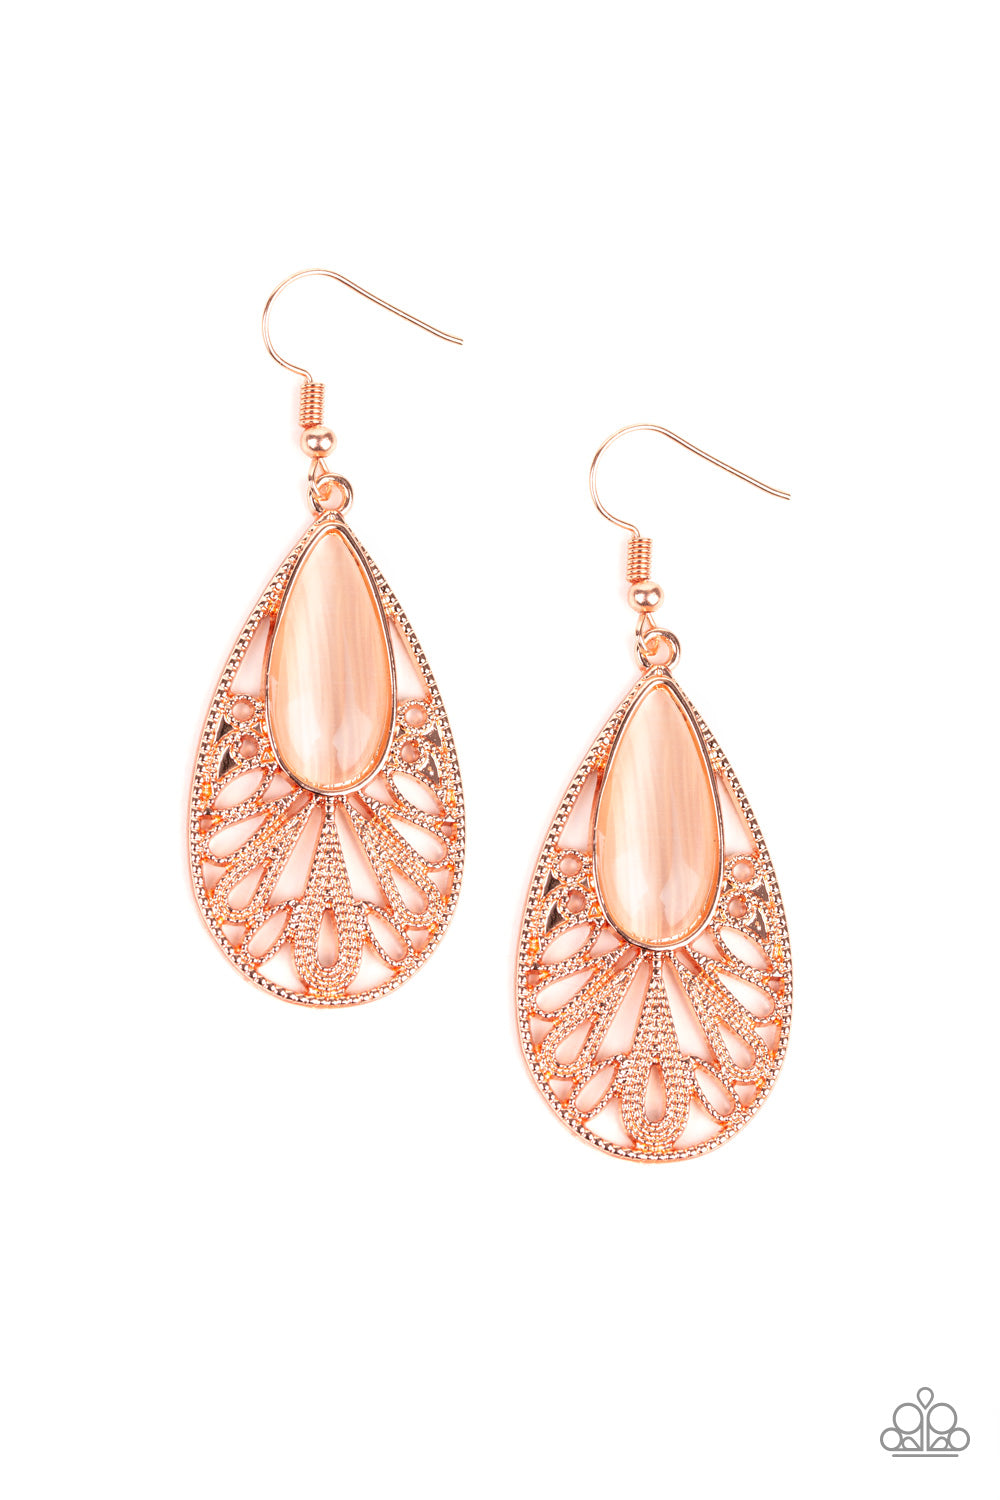 Glowing Tranquility - Copper Earrings